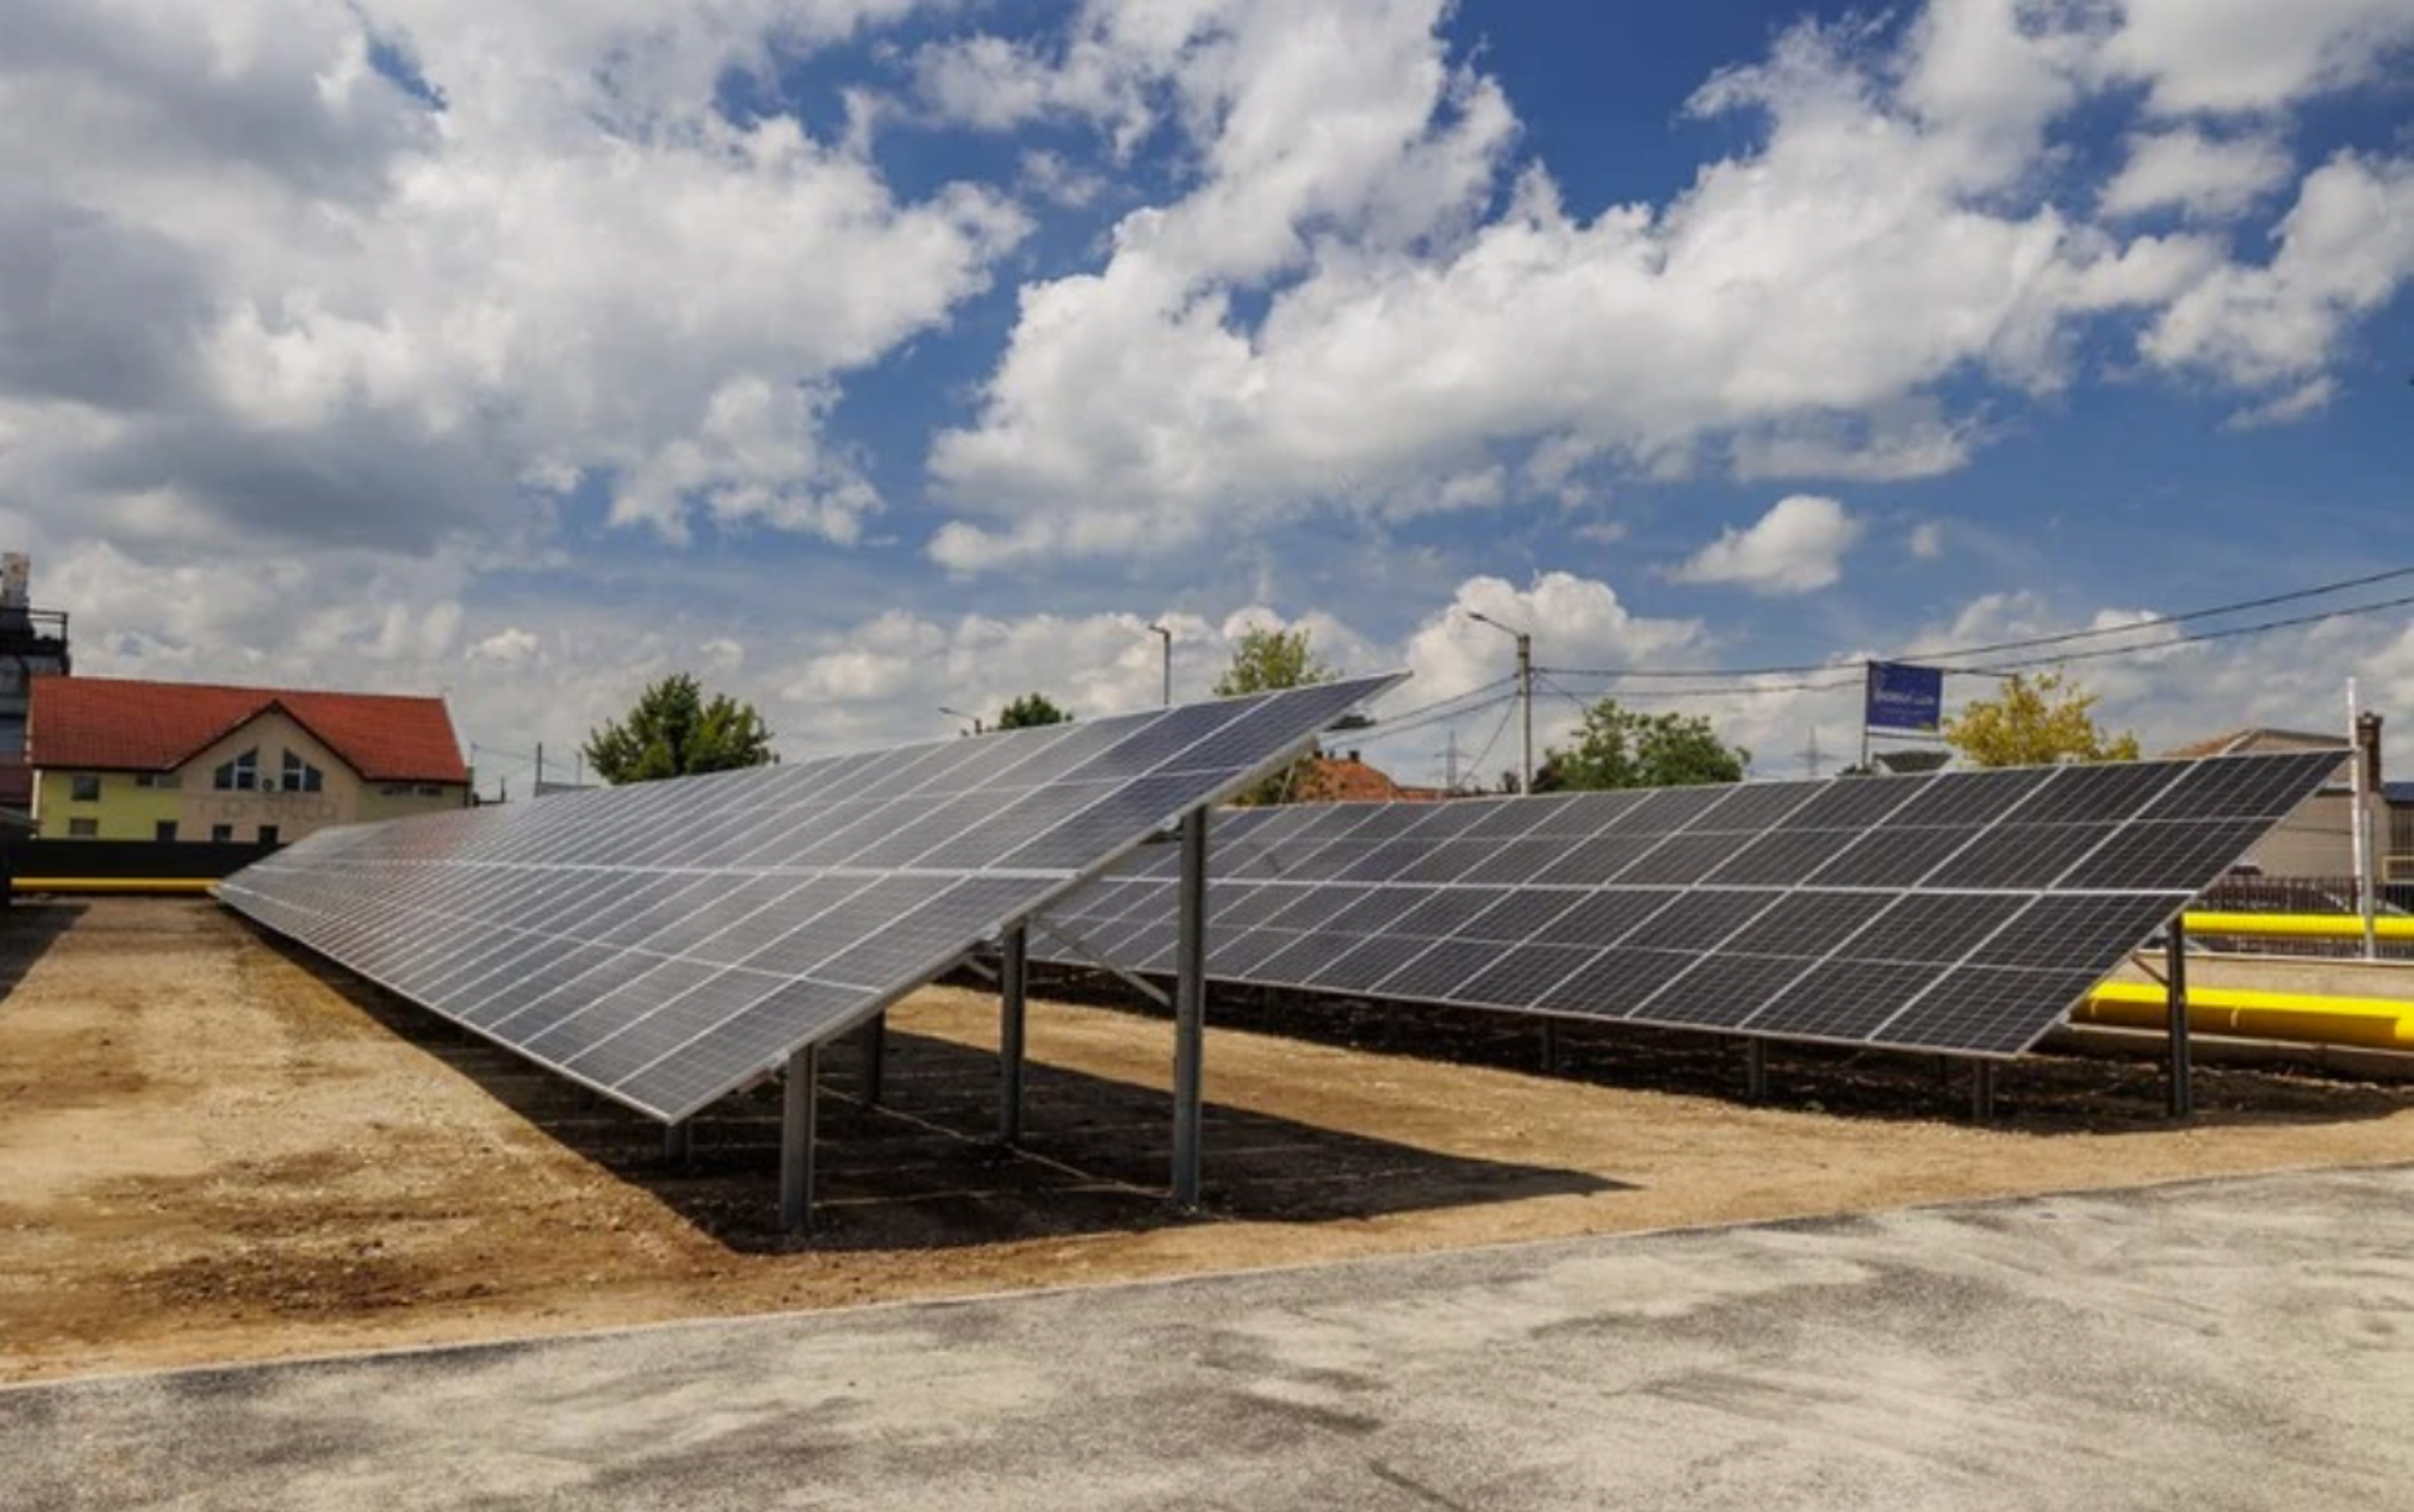 Solar panels in Romania